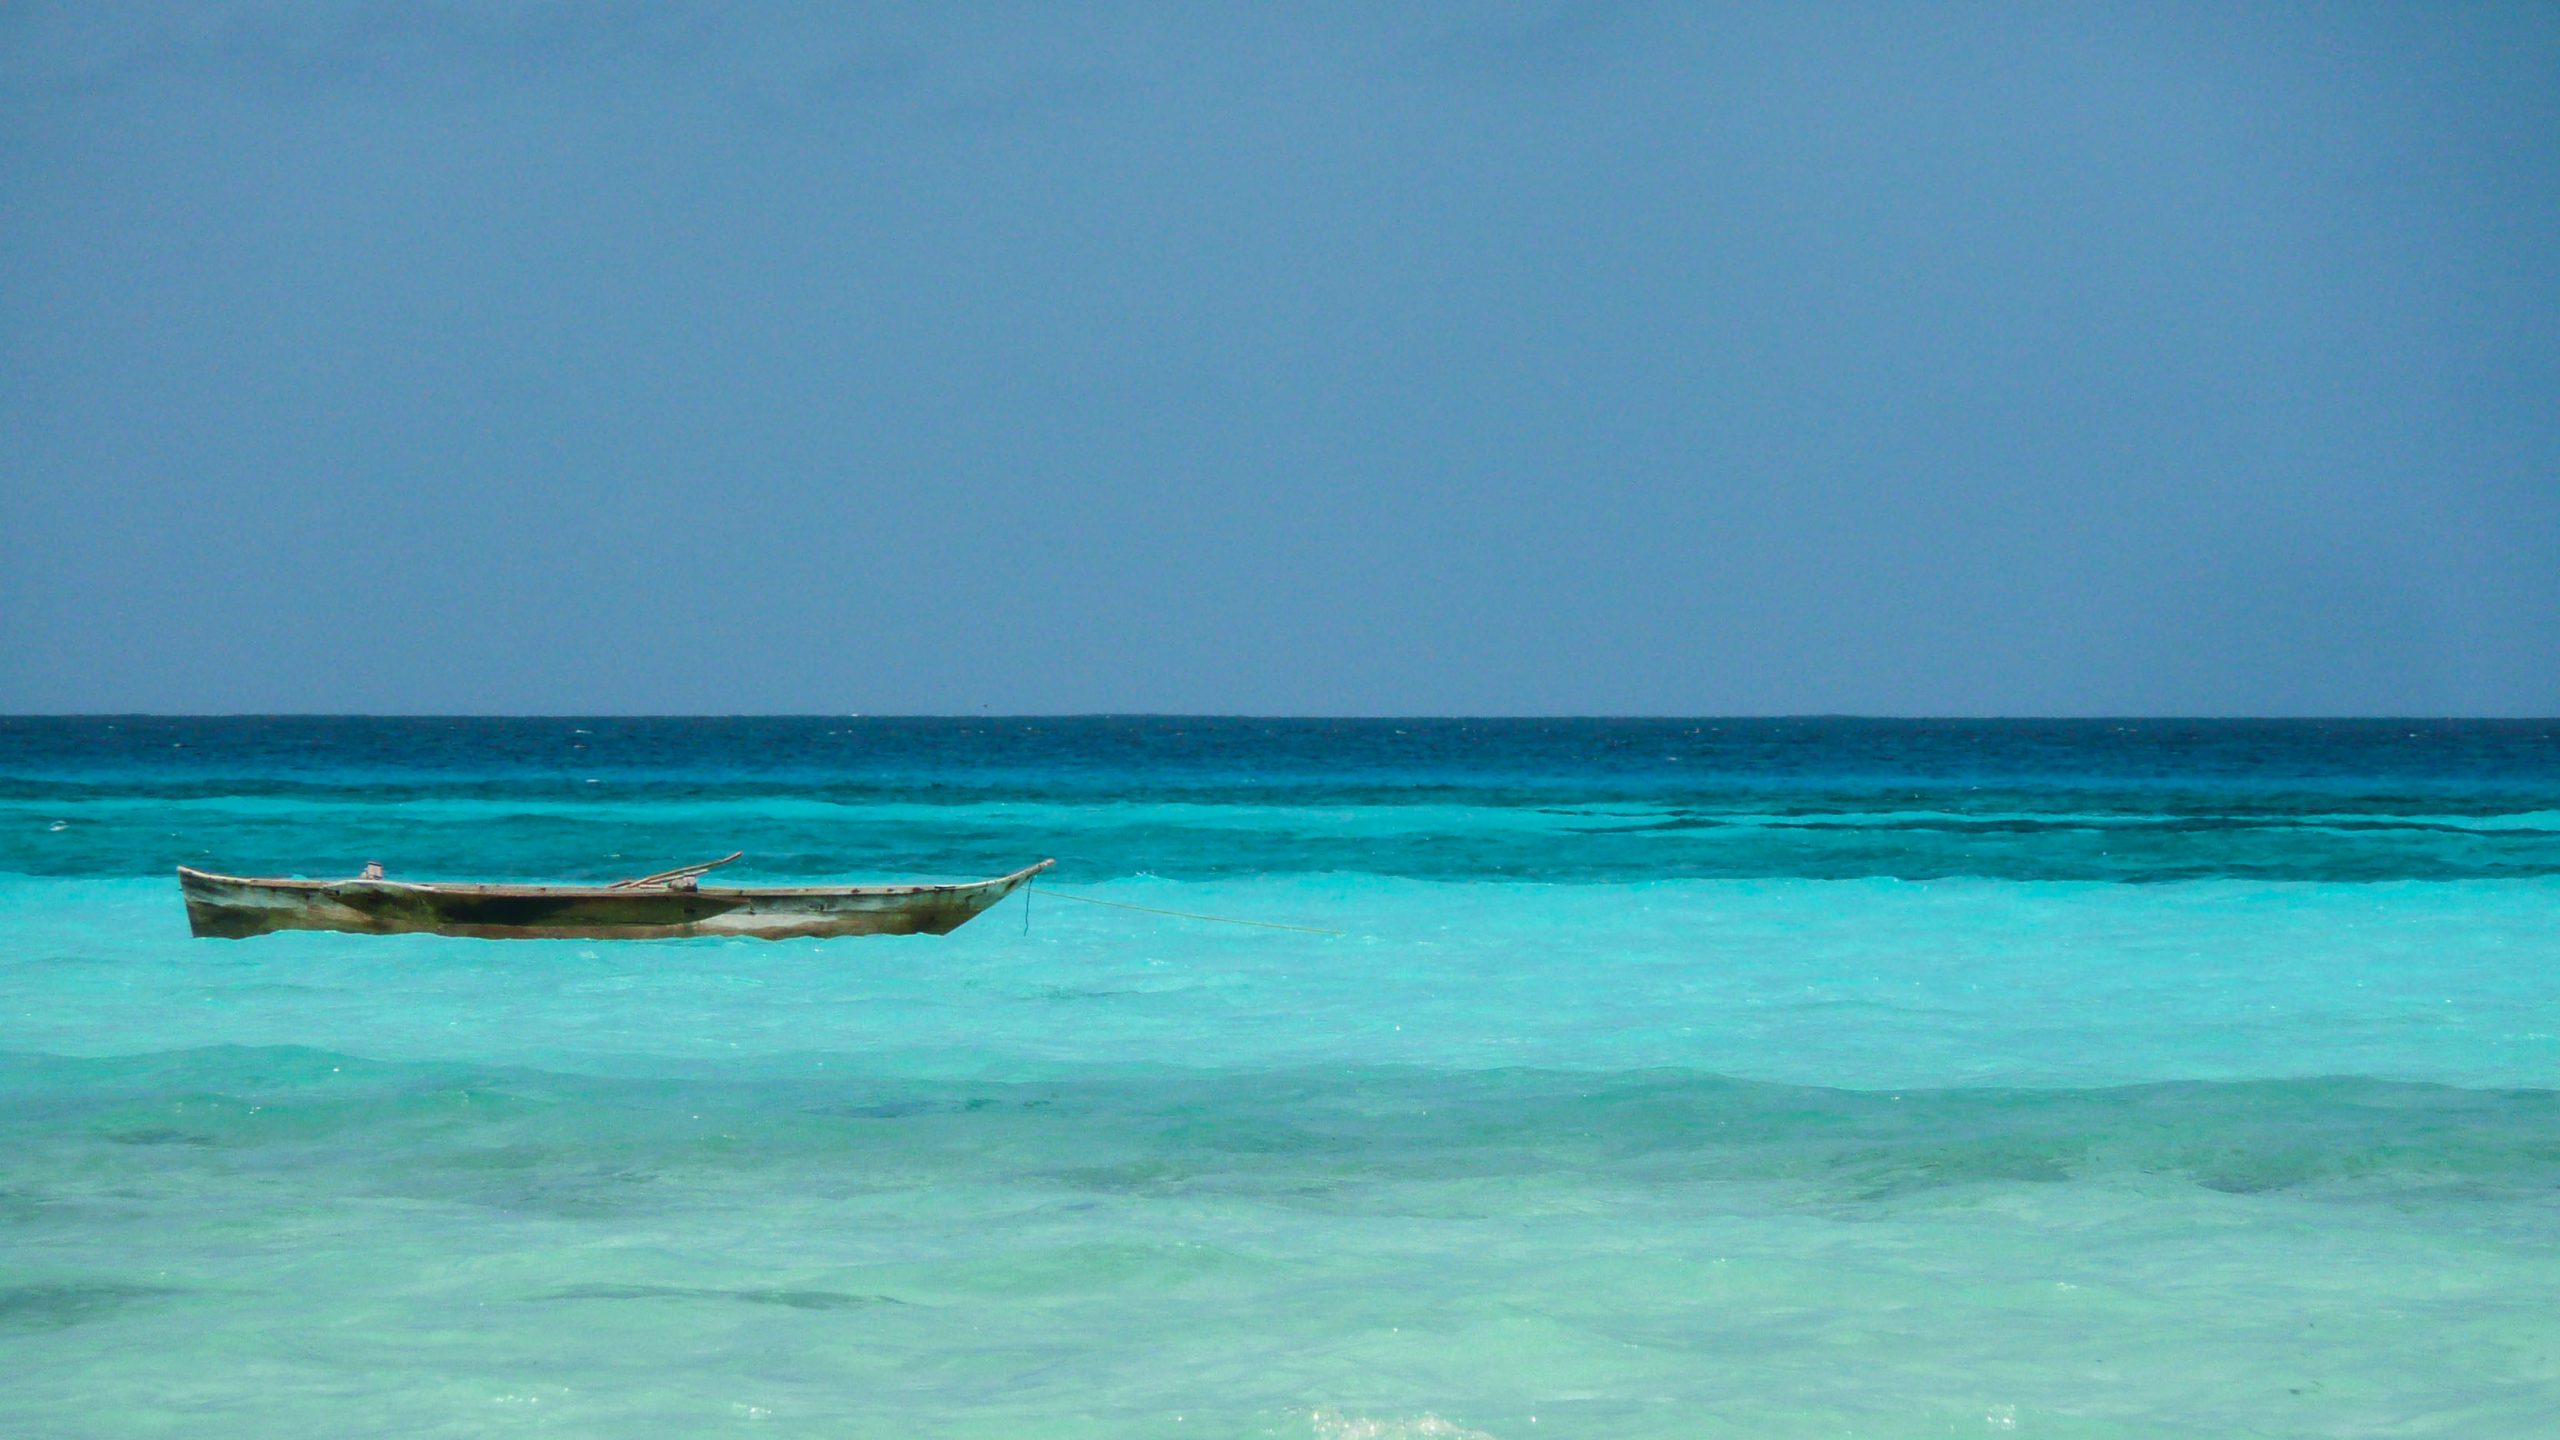 Unmanned dugout canoe floating on turquoise water near Zanzibar Tanzania